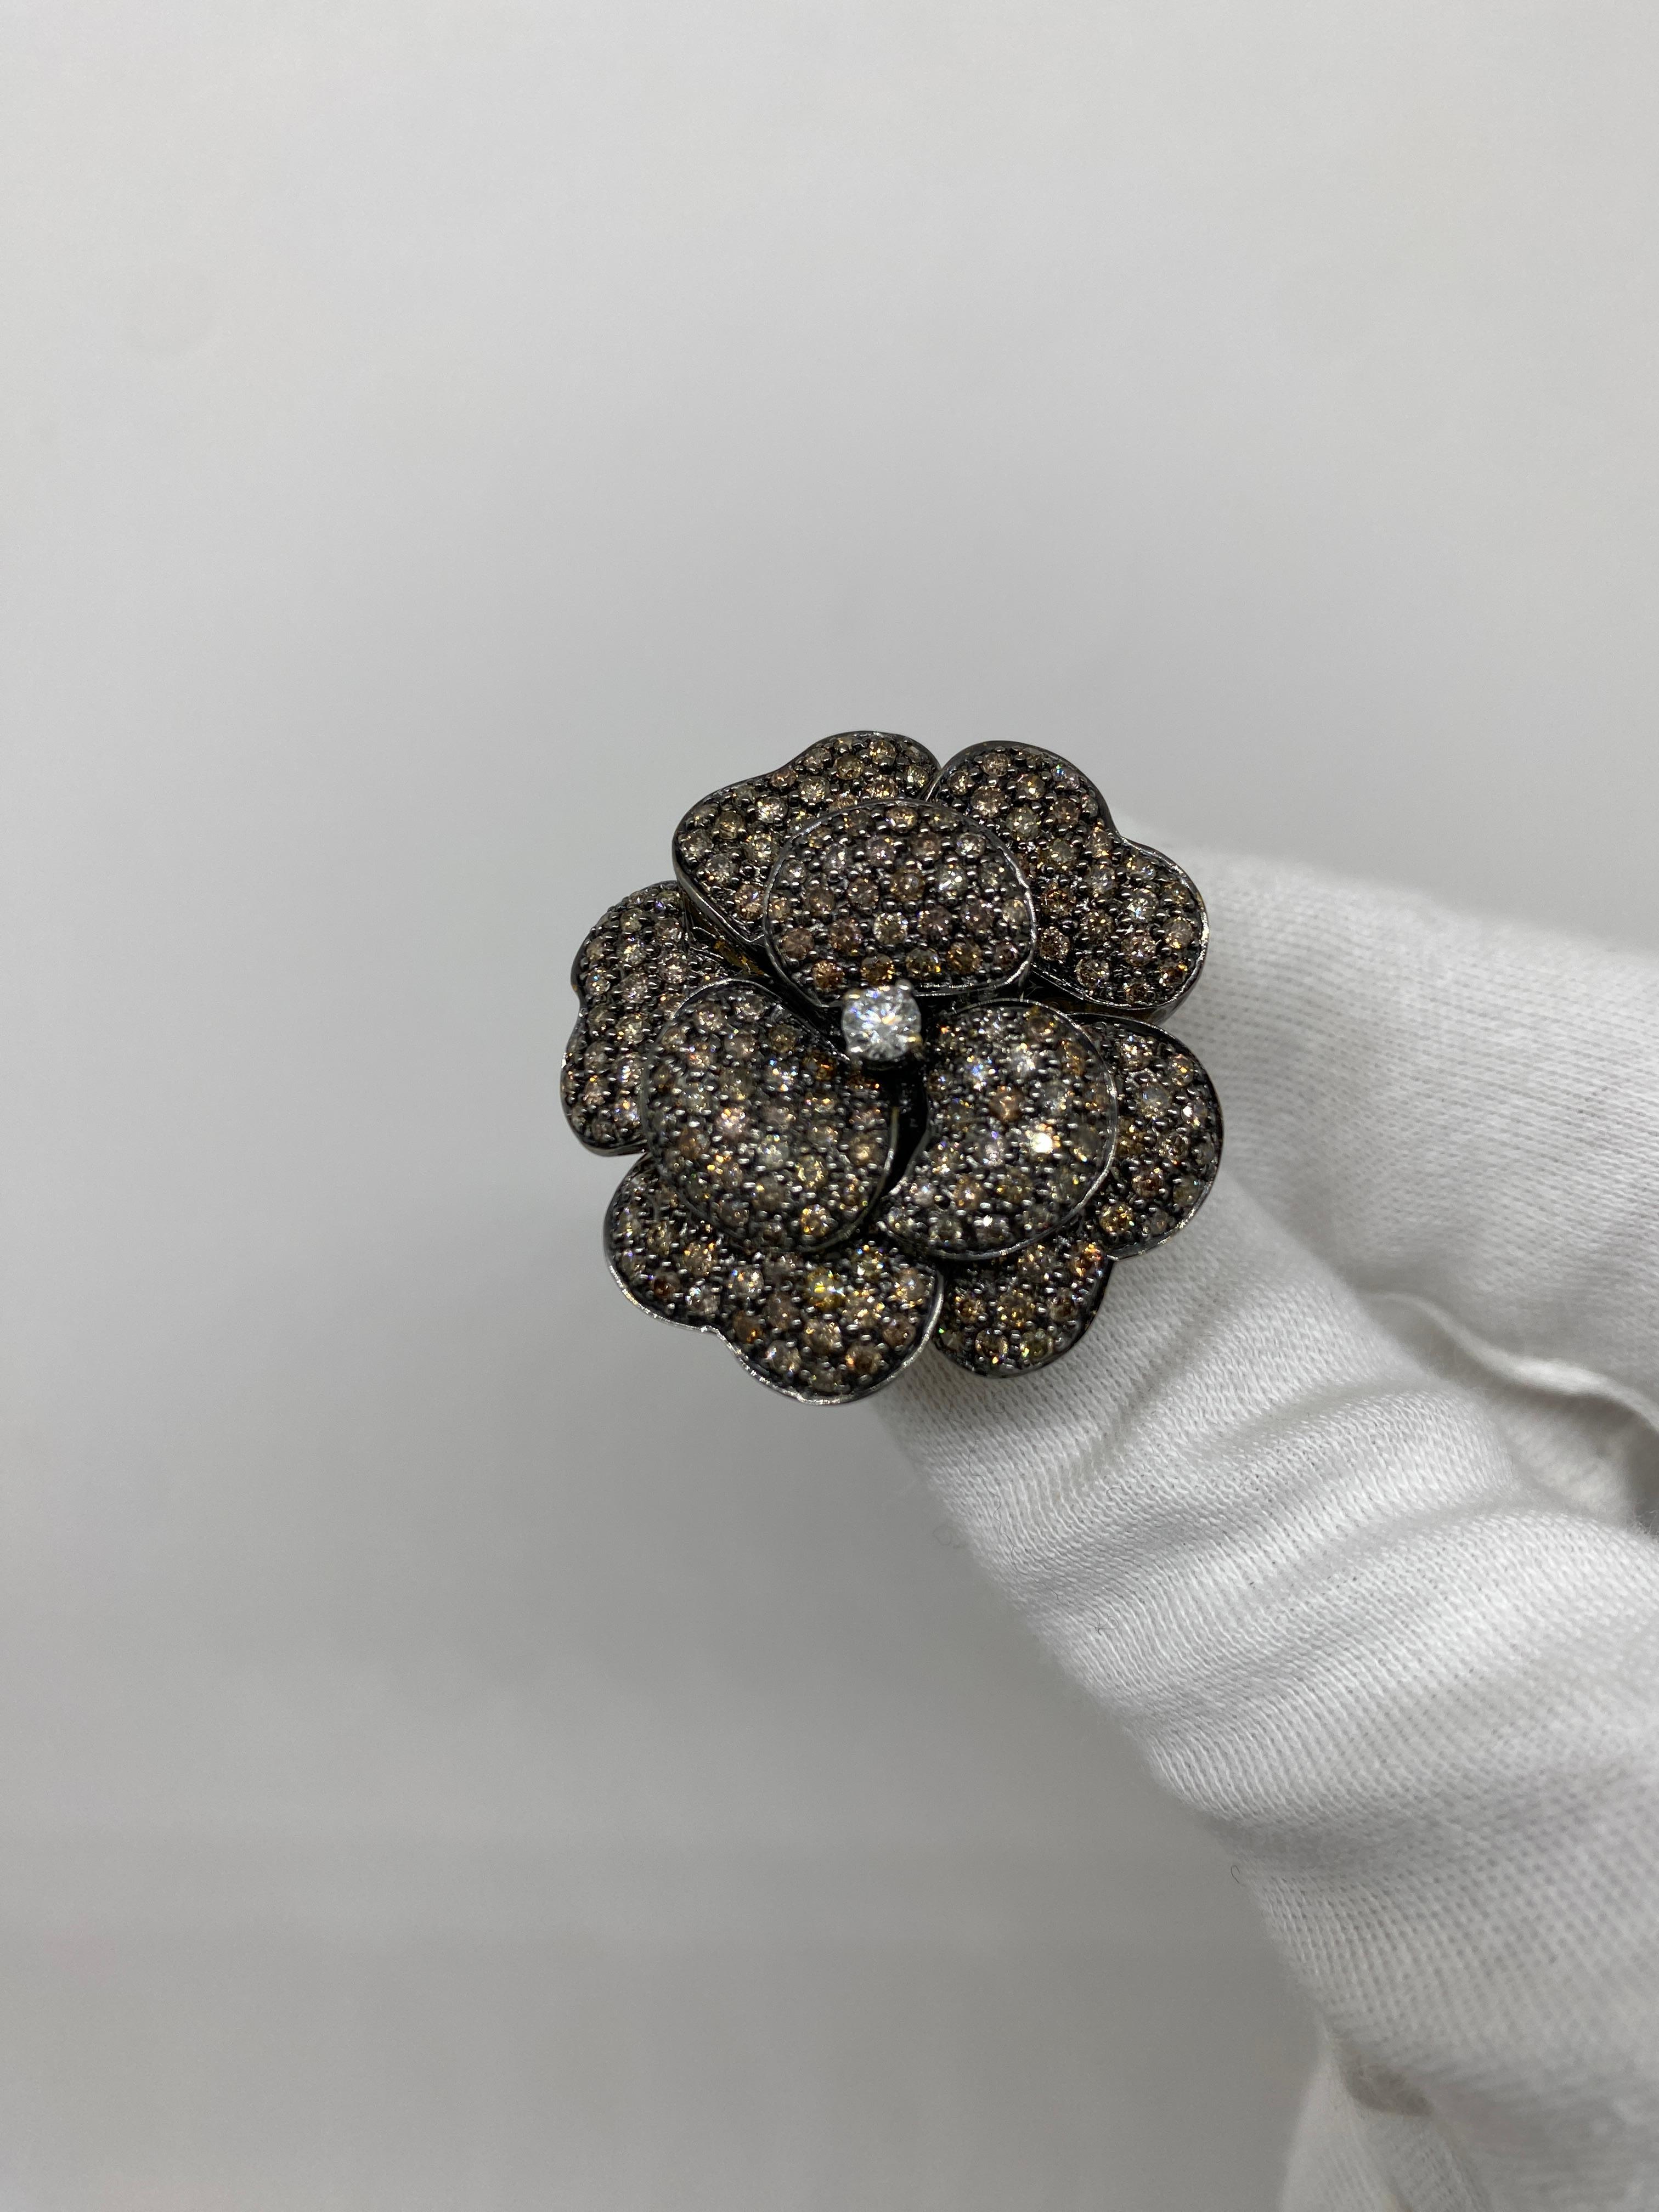 Brilliant Cut 18Kt Rose Gold Flower Ring / Pendant / Brooch 3.51 Brown & White Diamonds For Sale